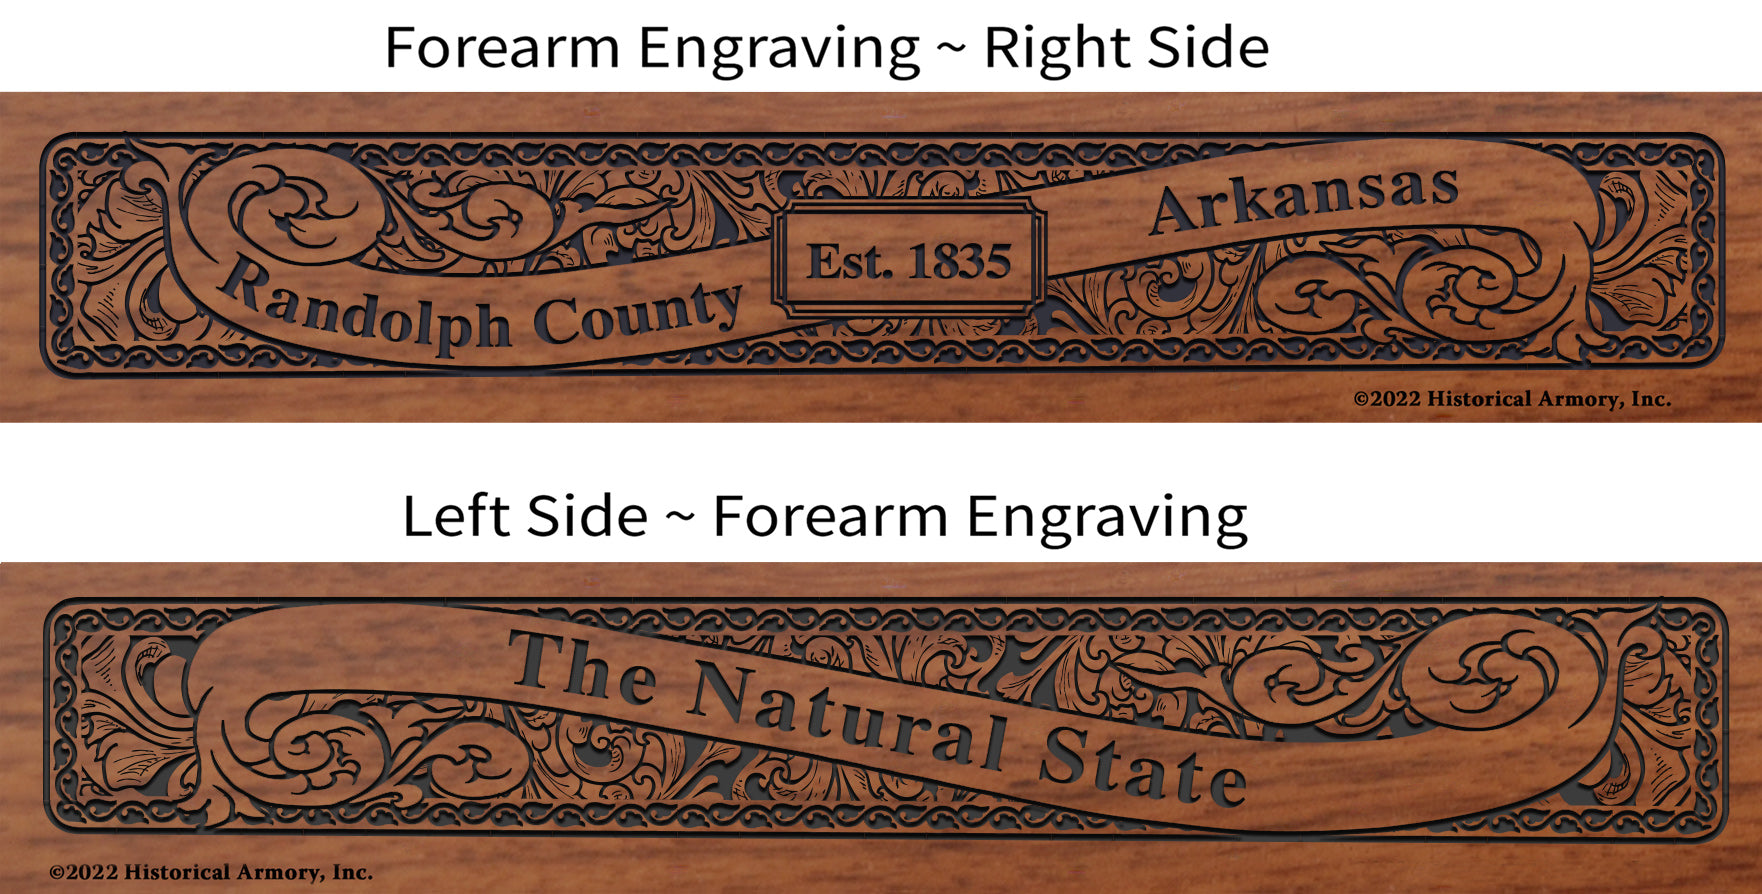 Randolph County Arkansas Engraved Rifle Forearm